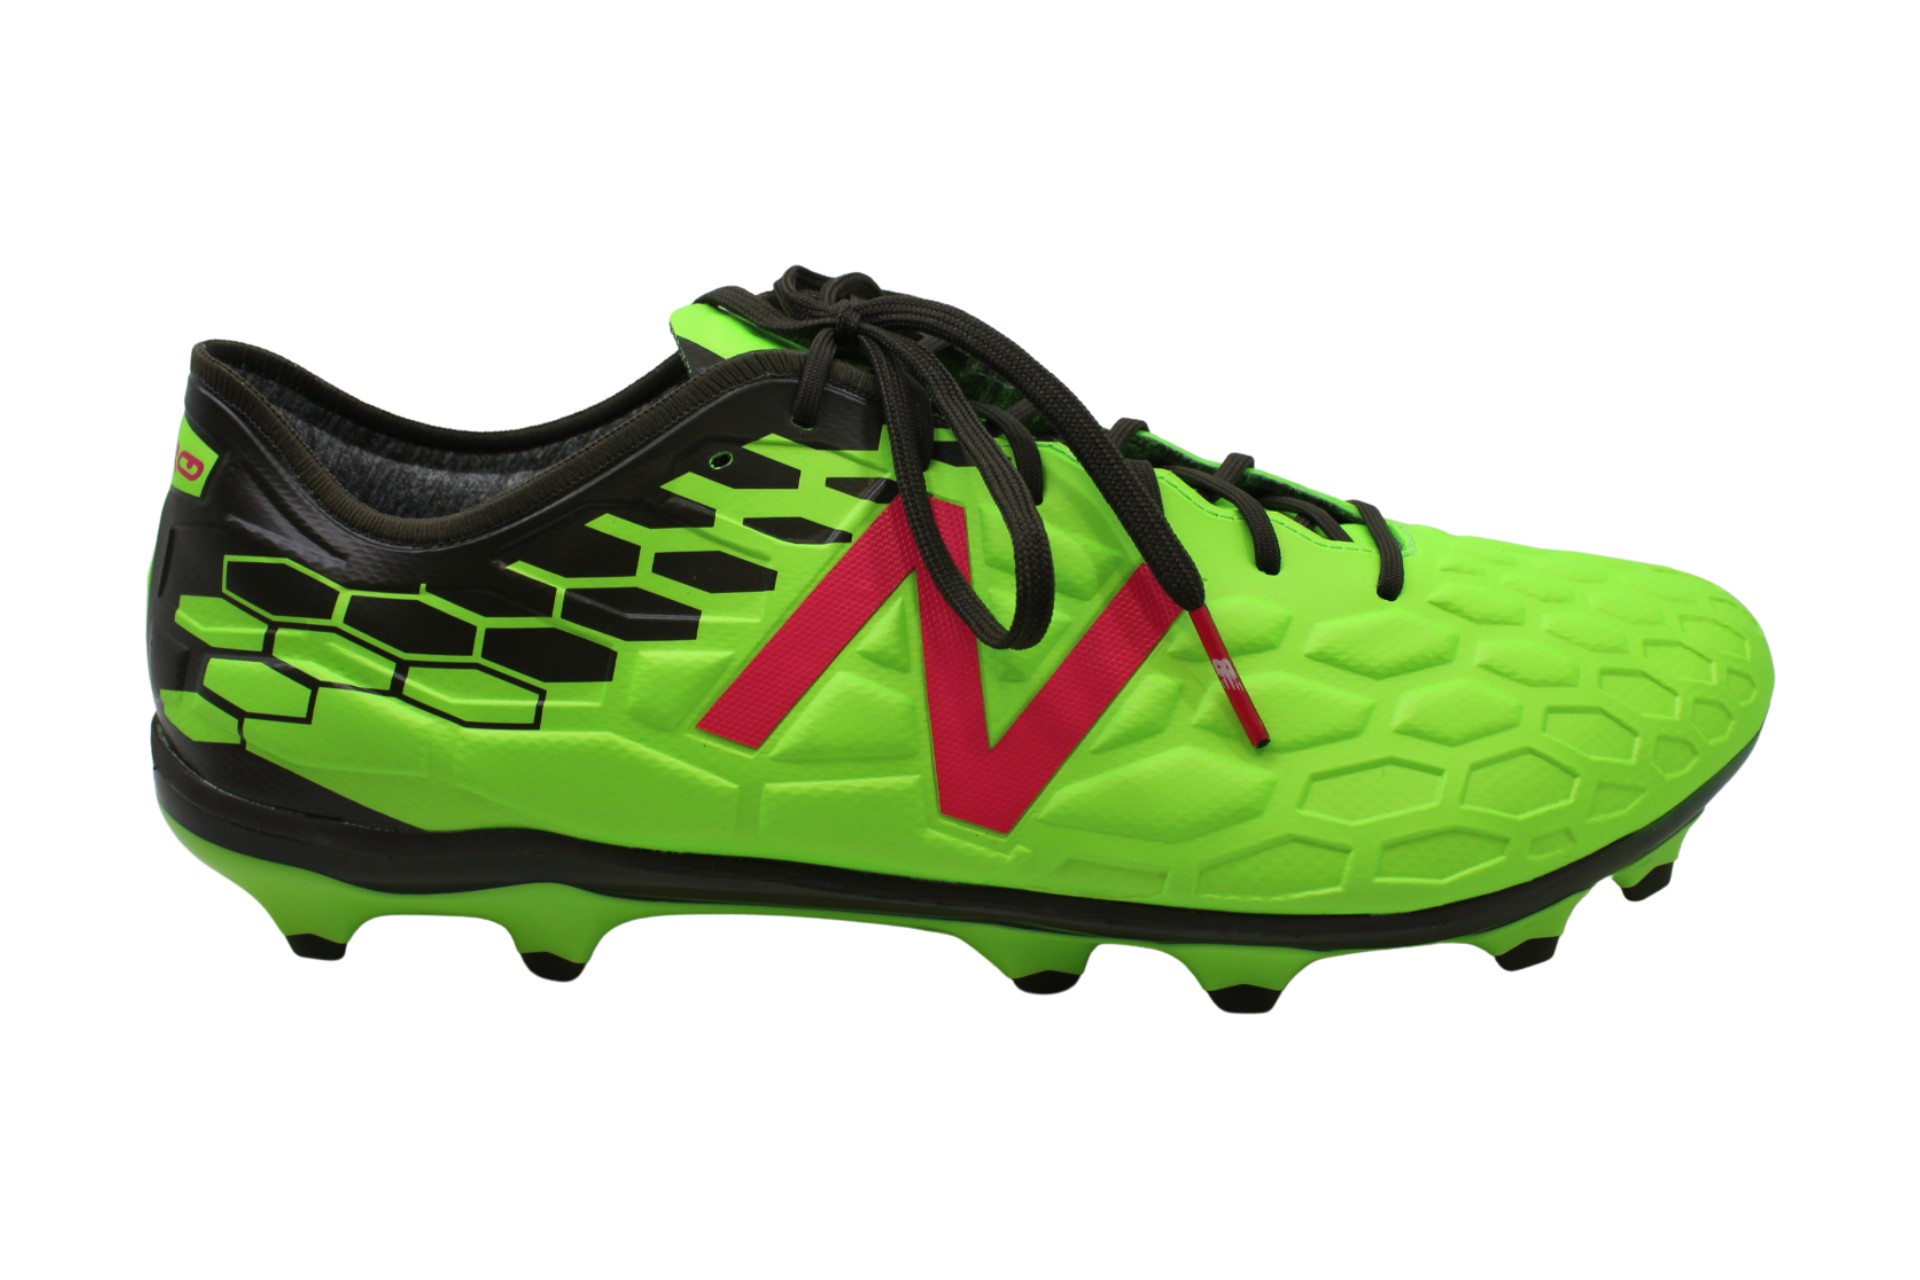 NEW BALANCE MEN'S Visaro 2.0 Pro Firm Ground Soccer Shoe, Energy Lime/Dark $91.85 - PicClick